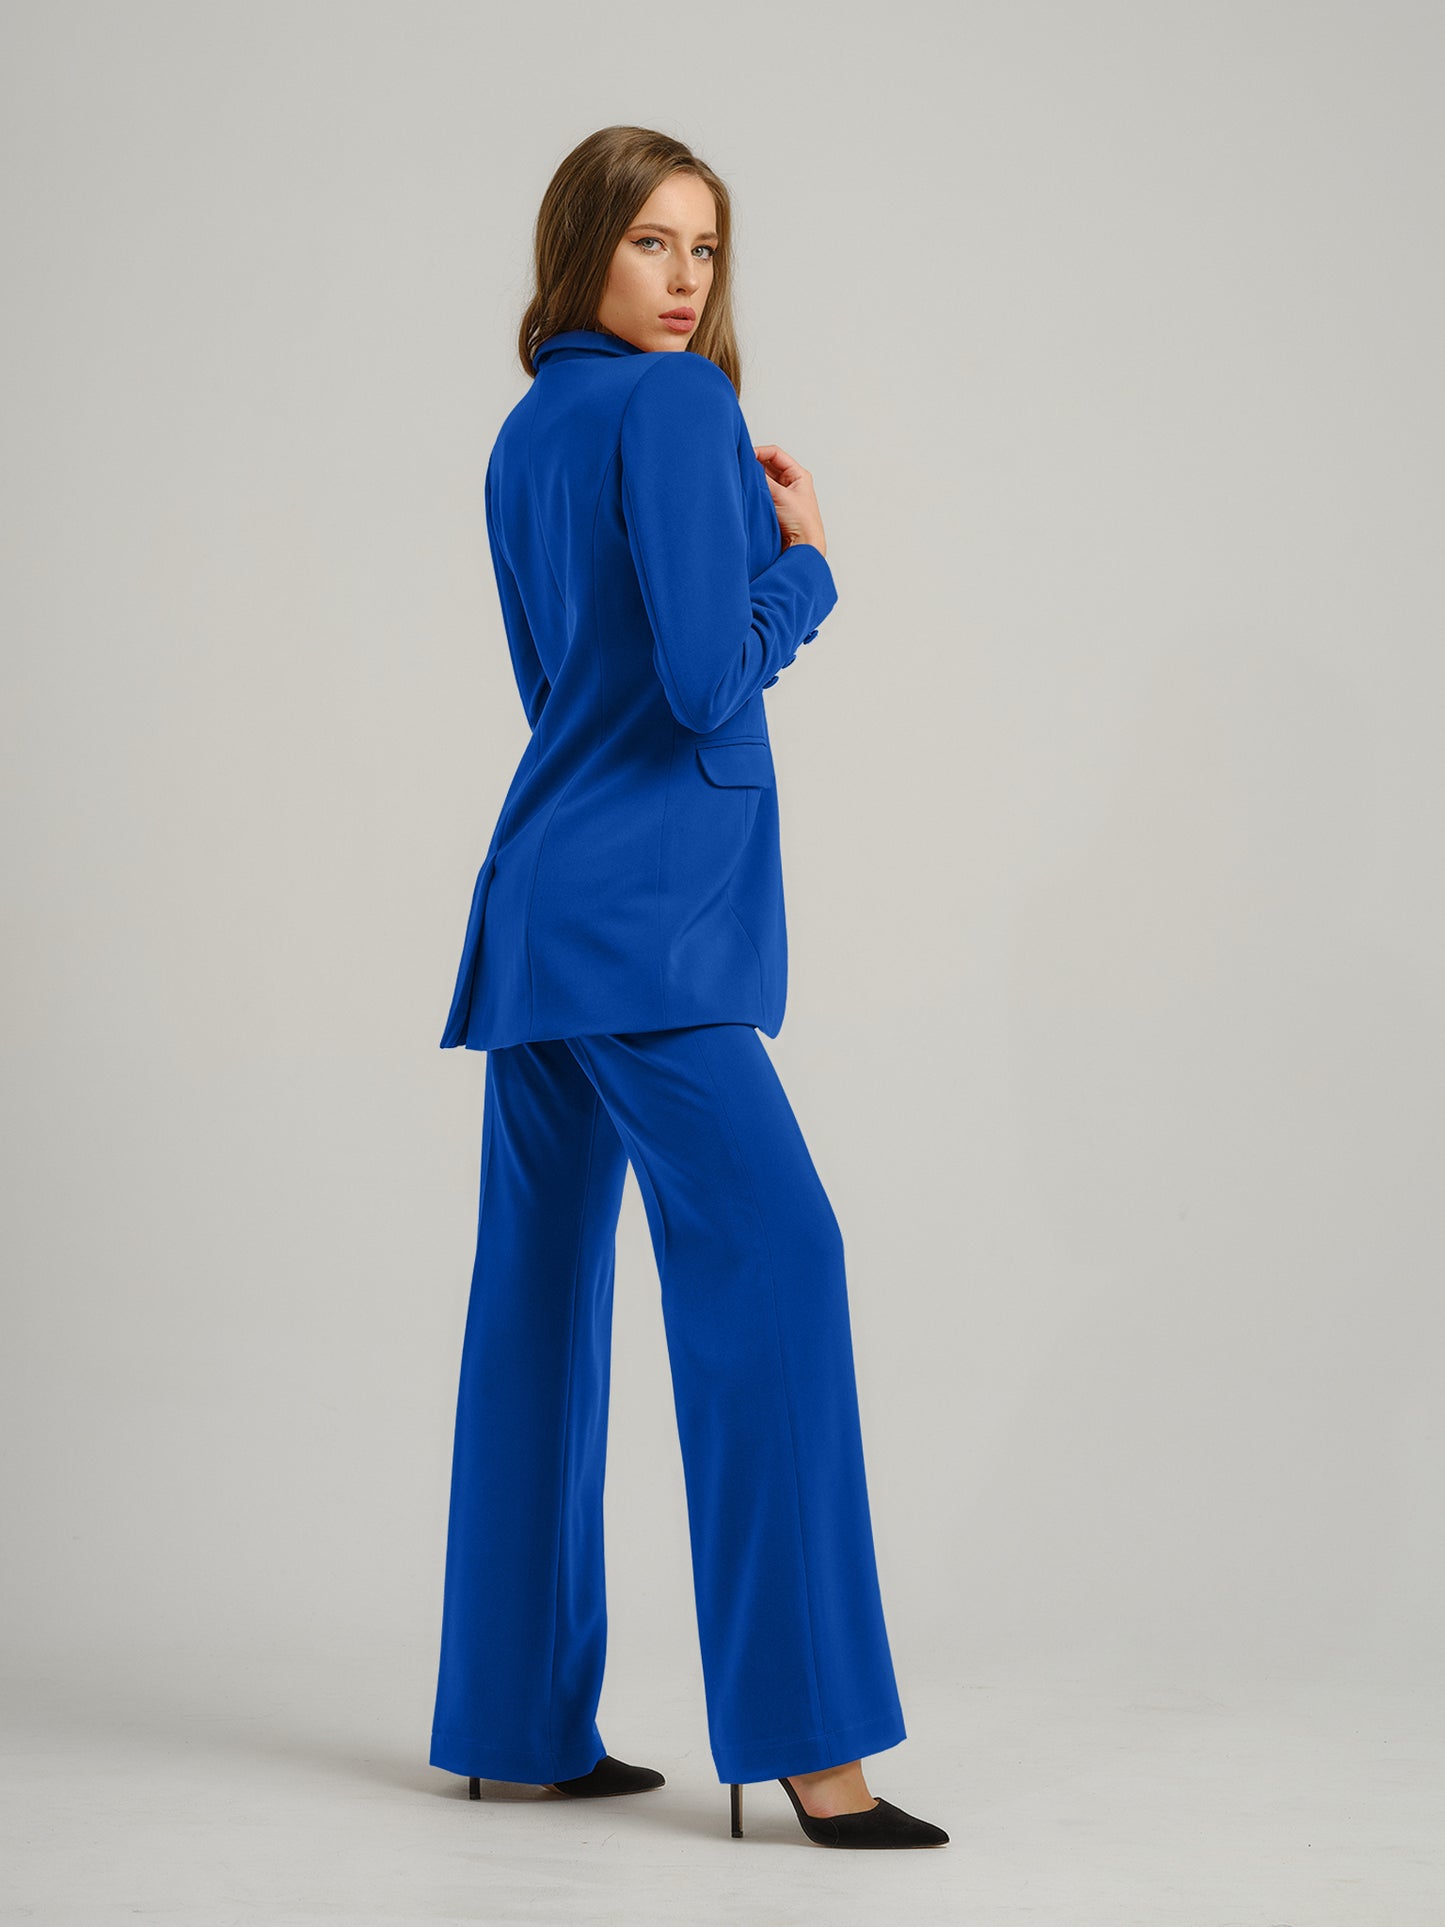 Royal Azure High-Waist Flared Trousers by Tia Dorraine Women's Luxury Fashion Designer Clothing Brand